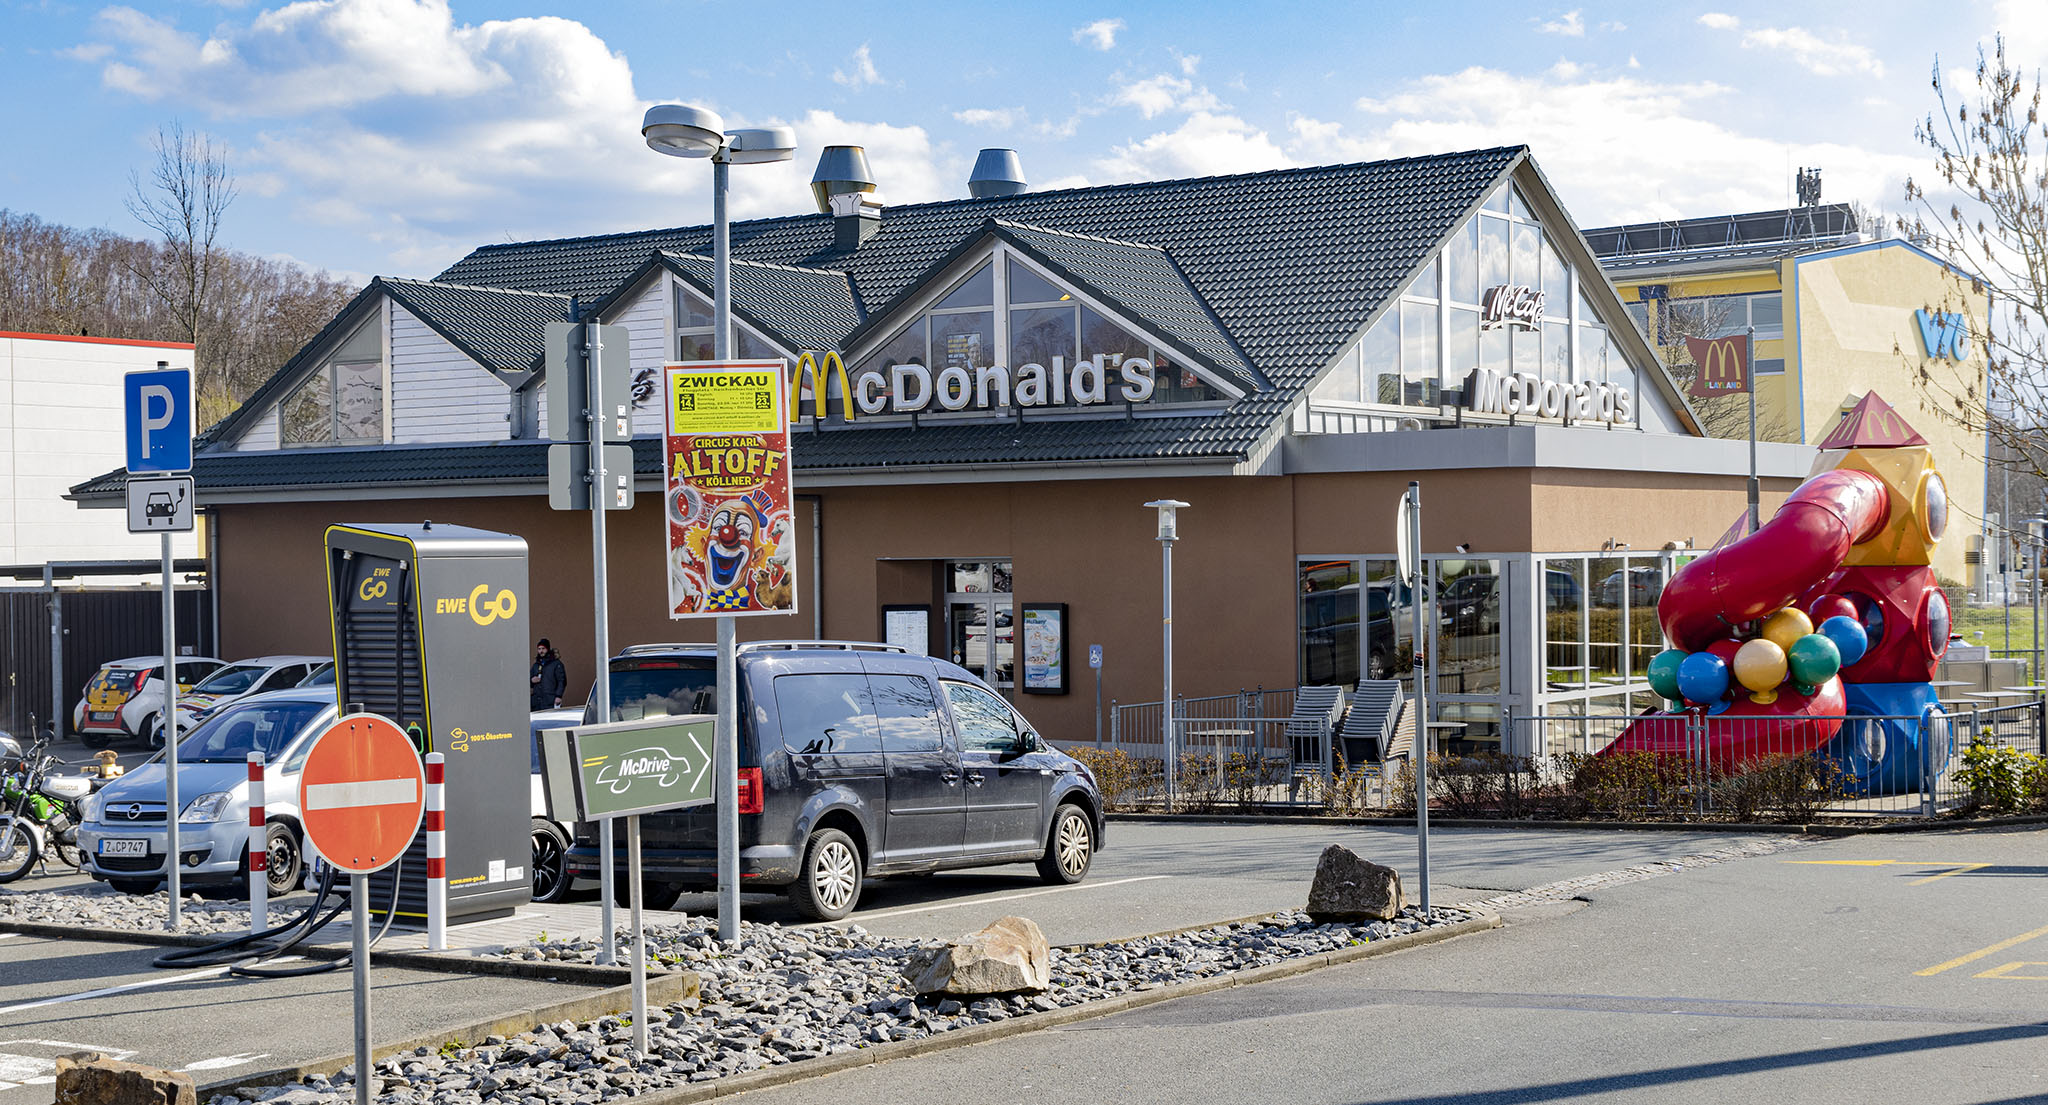 Das McDonald’s-Restaurant in Zwickau (Oskar-Arnold-Straße)